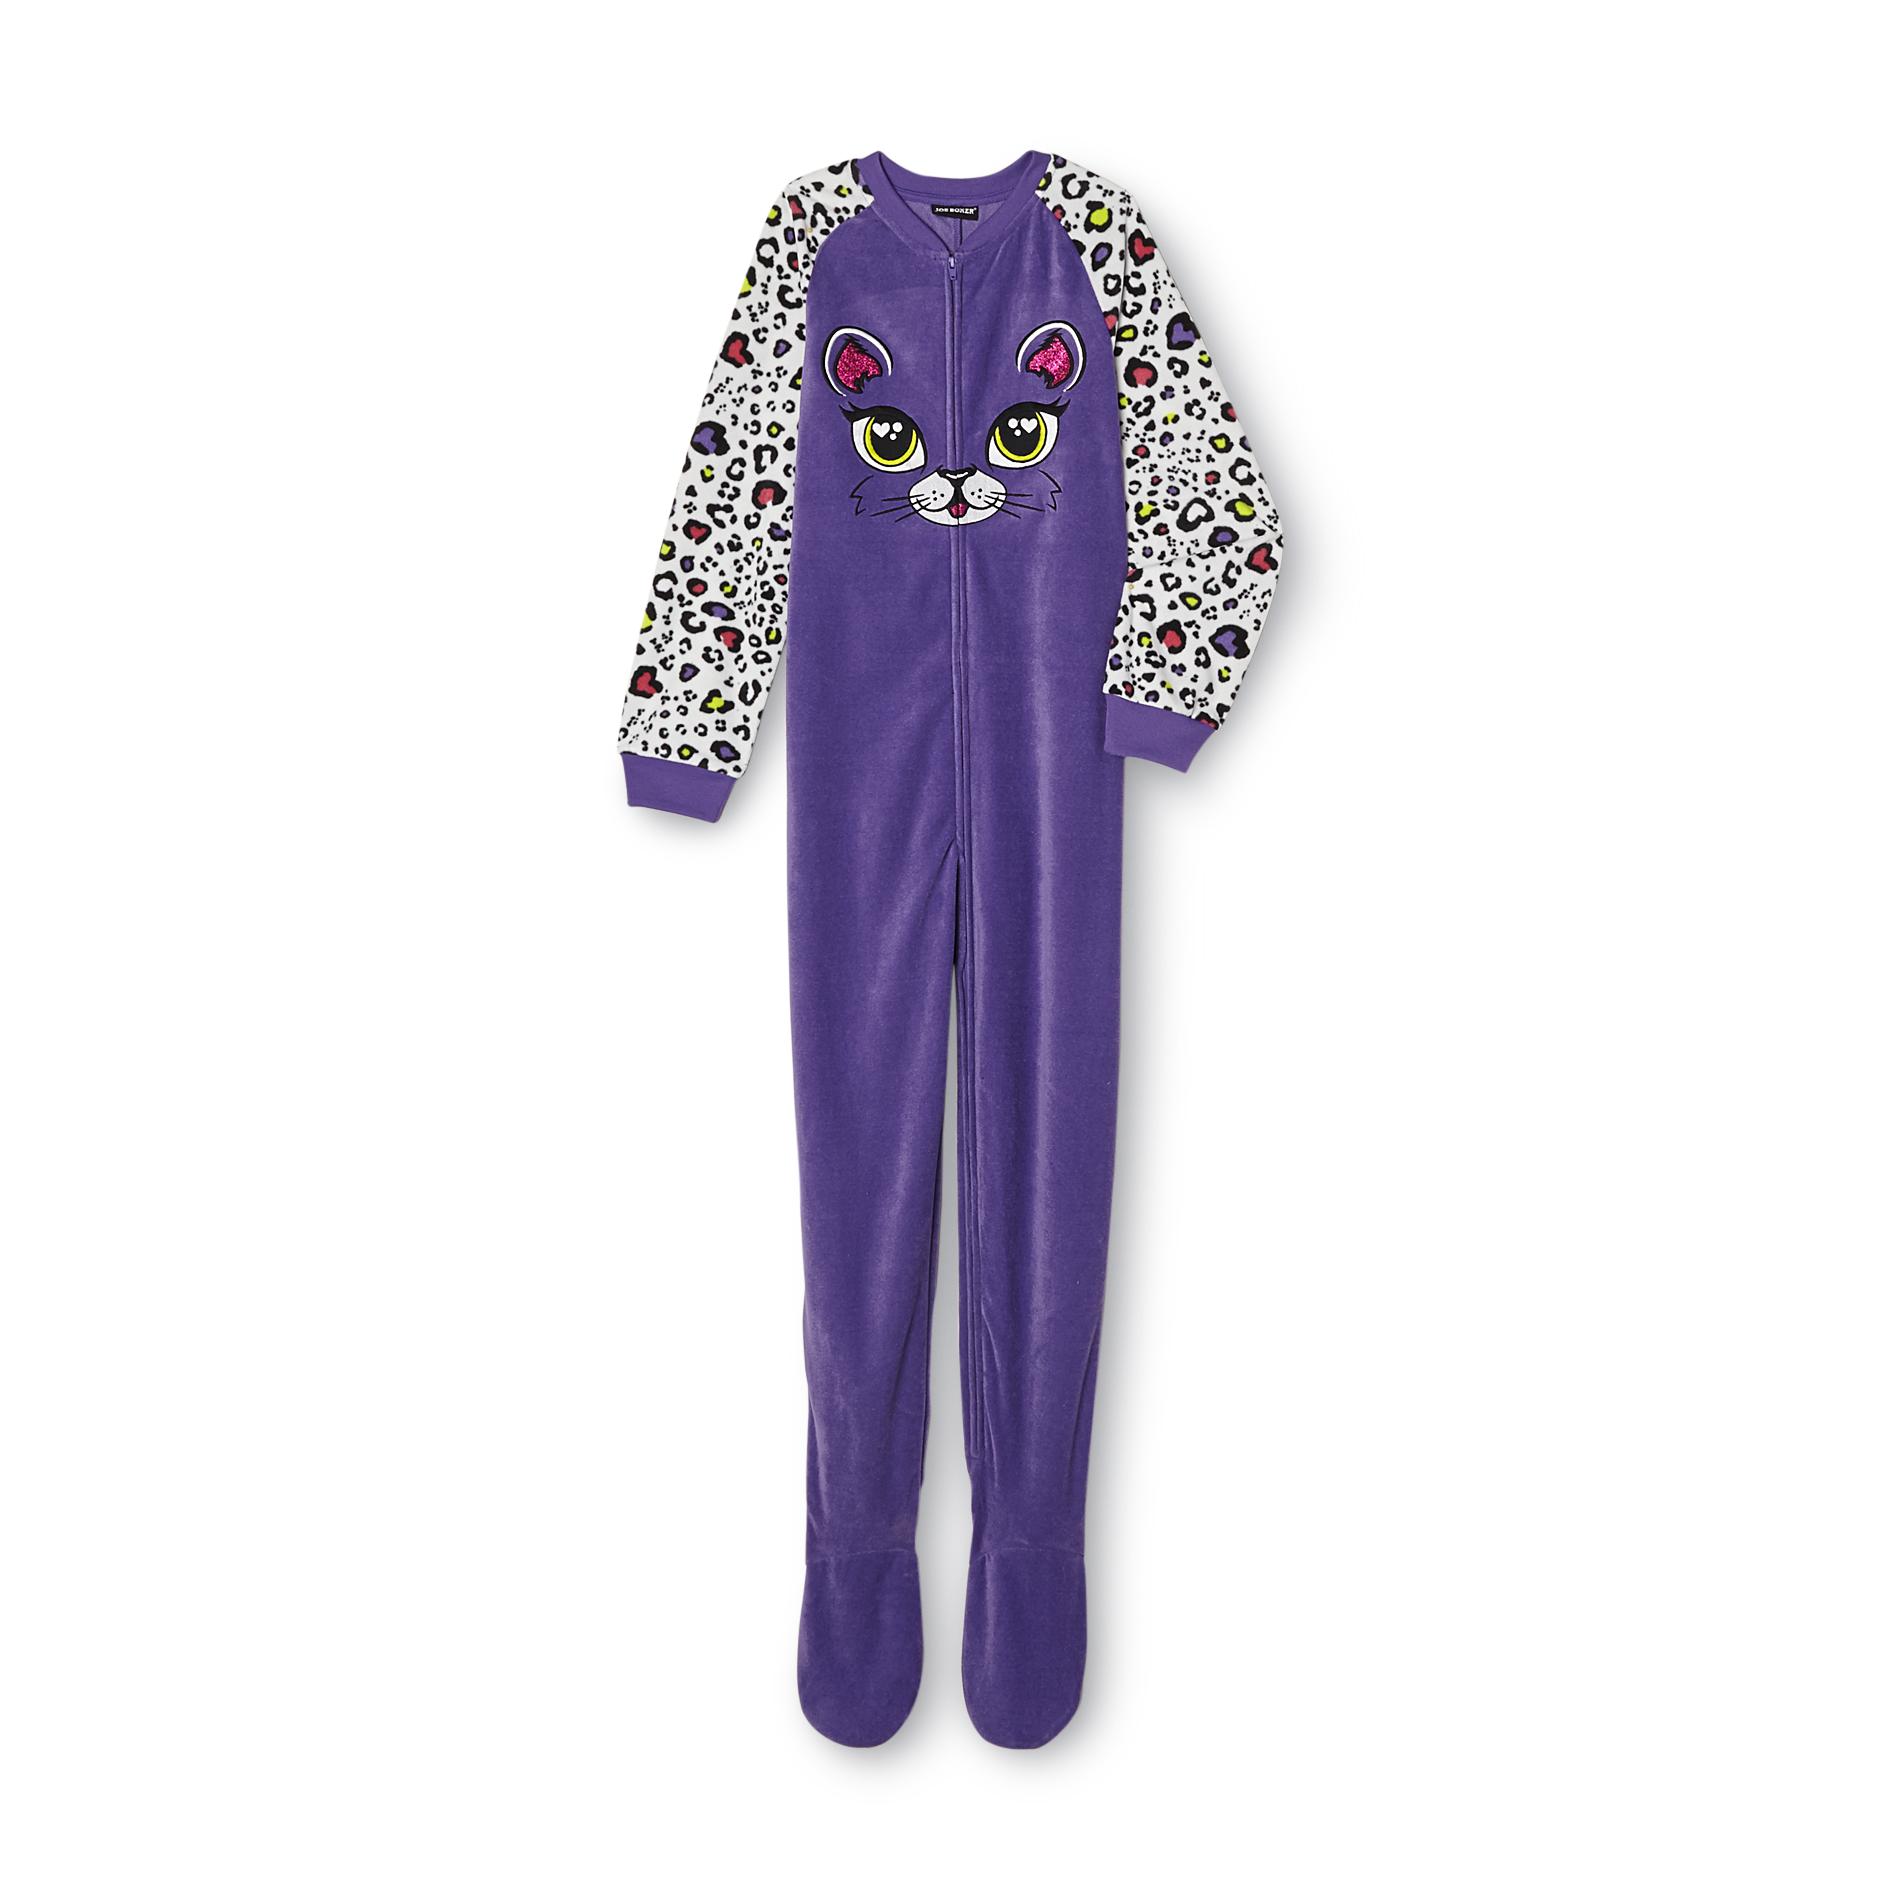 Girl's Microfleece Footed Pajamas - Kitty Cat